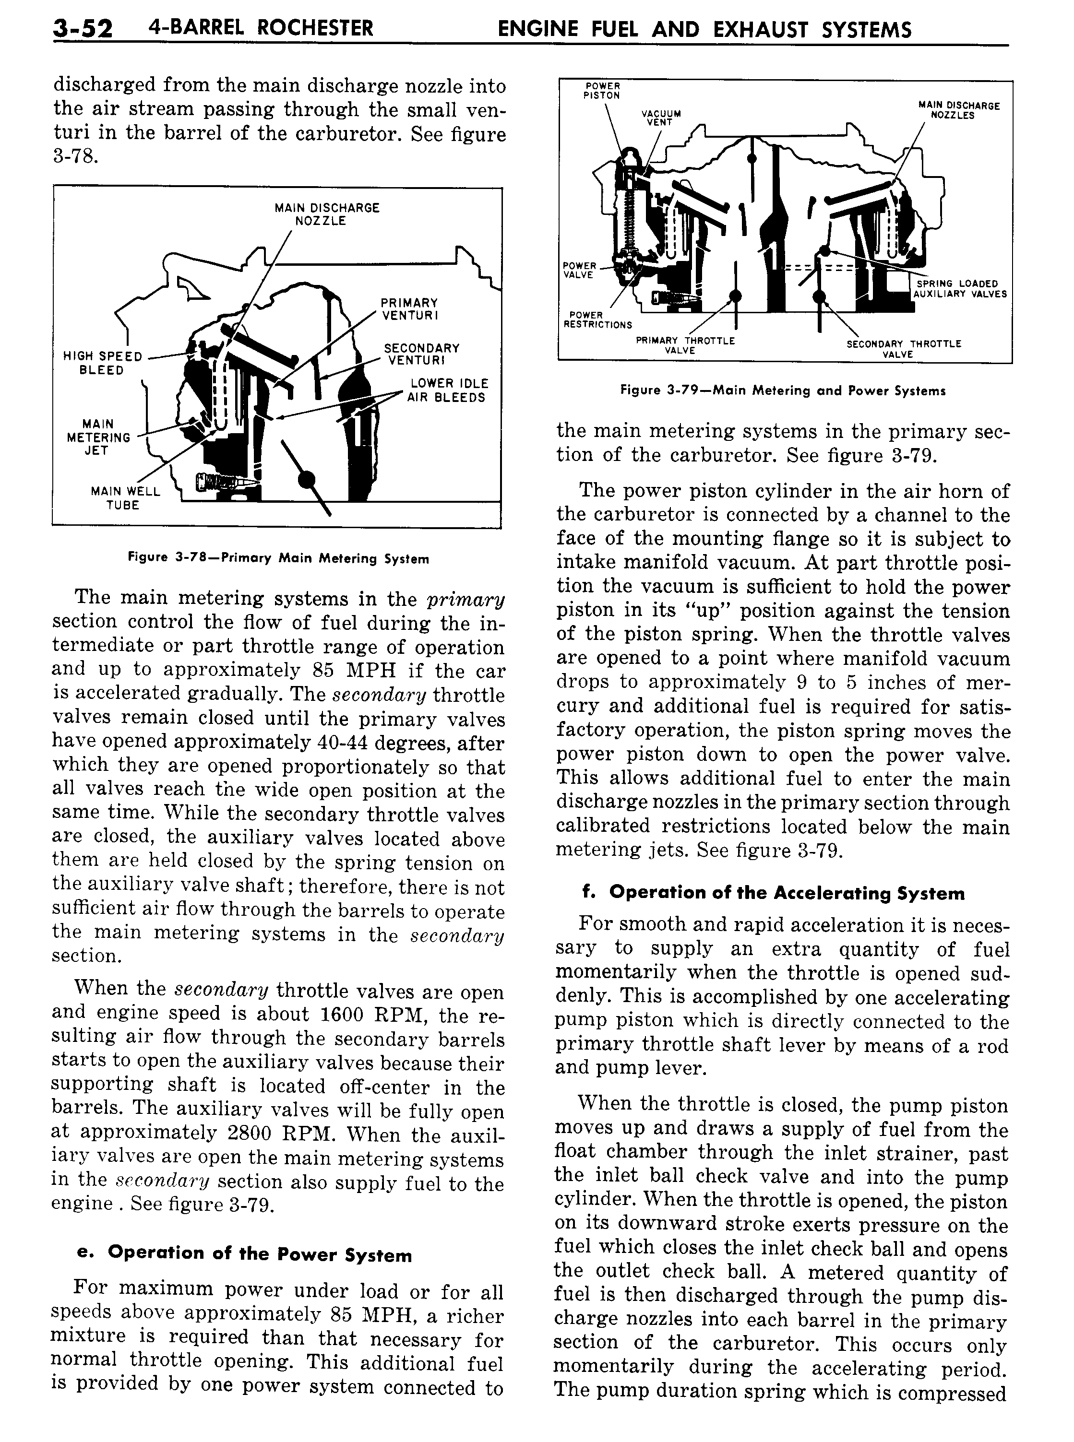 n_04 1957 Buick Shop Manual - Engine Fuel & Exhaust-052-052.jpg